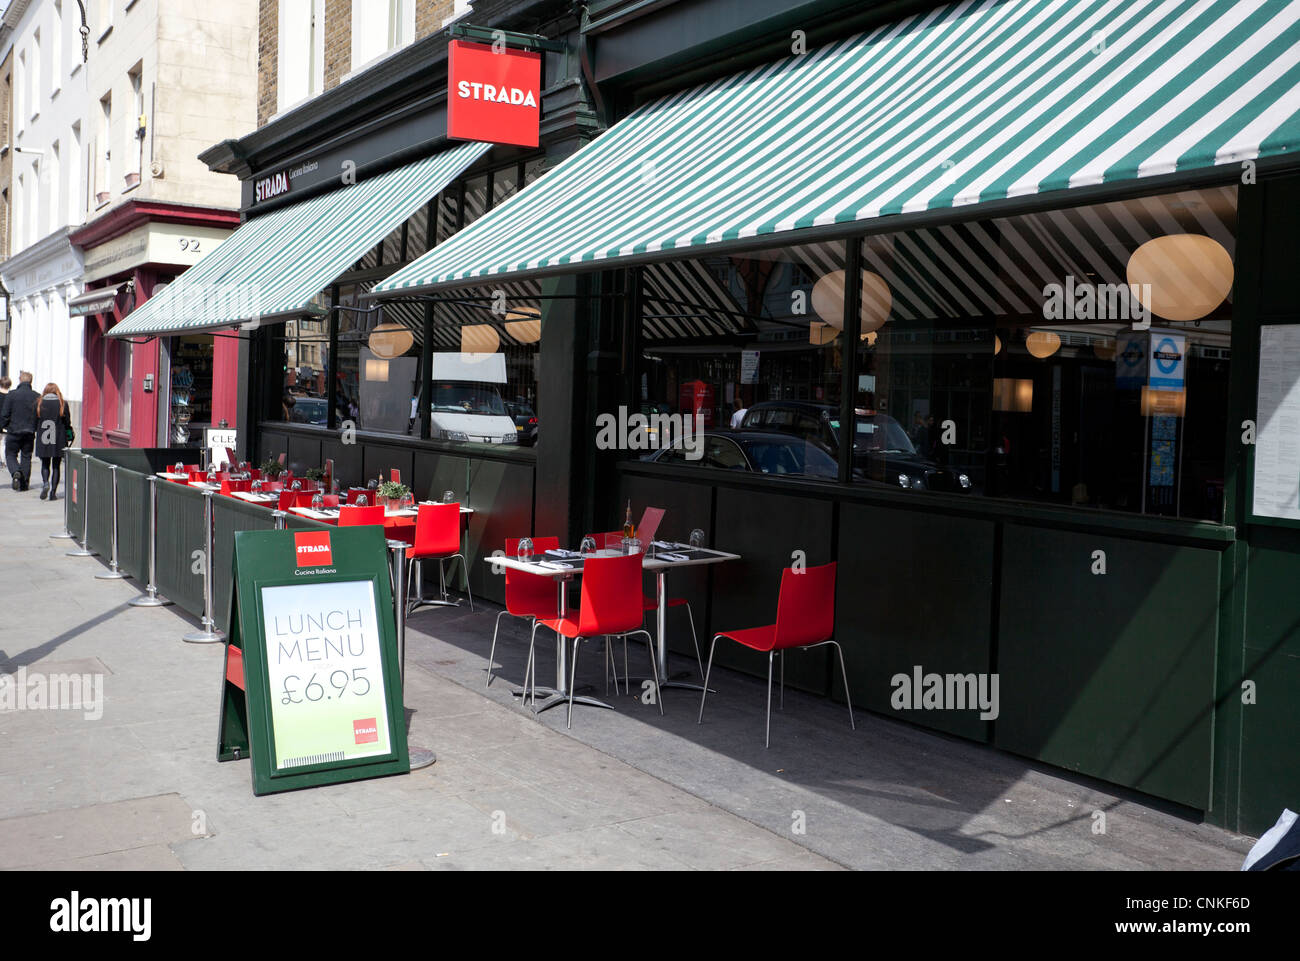 Un restaurant Strada terrasse vide, Londres, Angleterre, Royaume-Uni. Banque D'Images